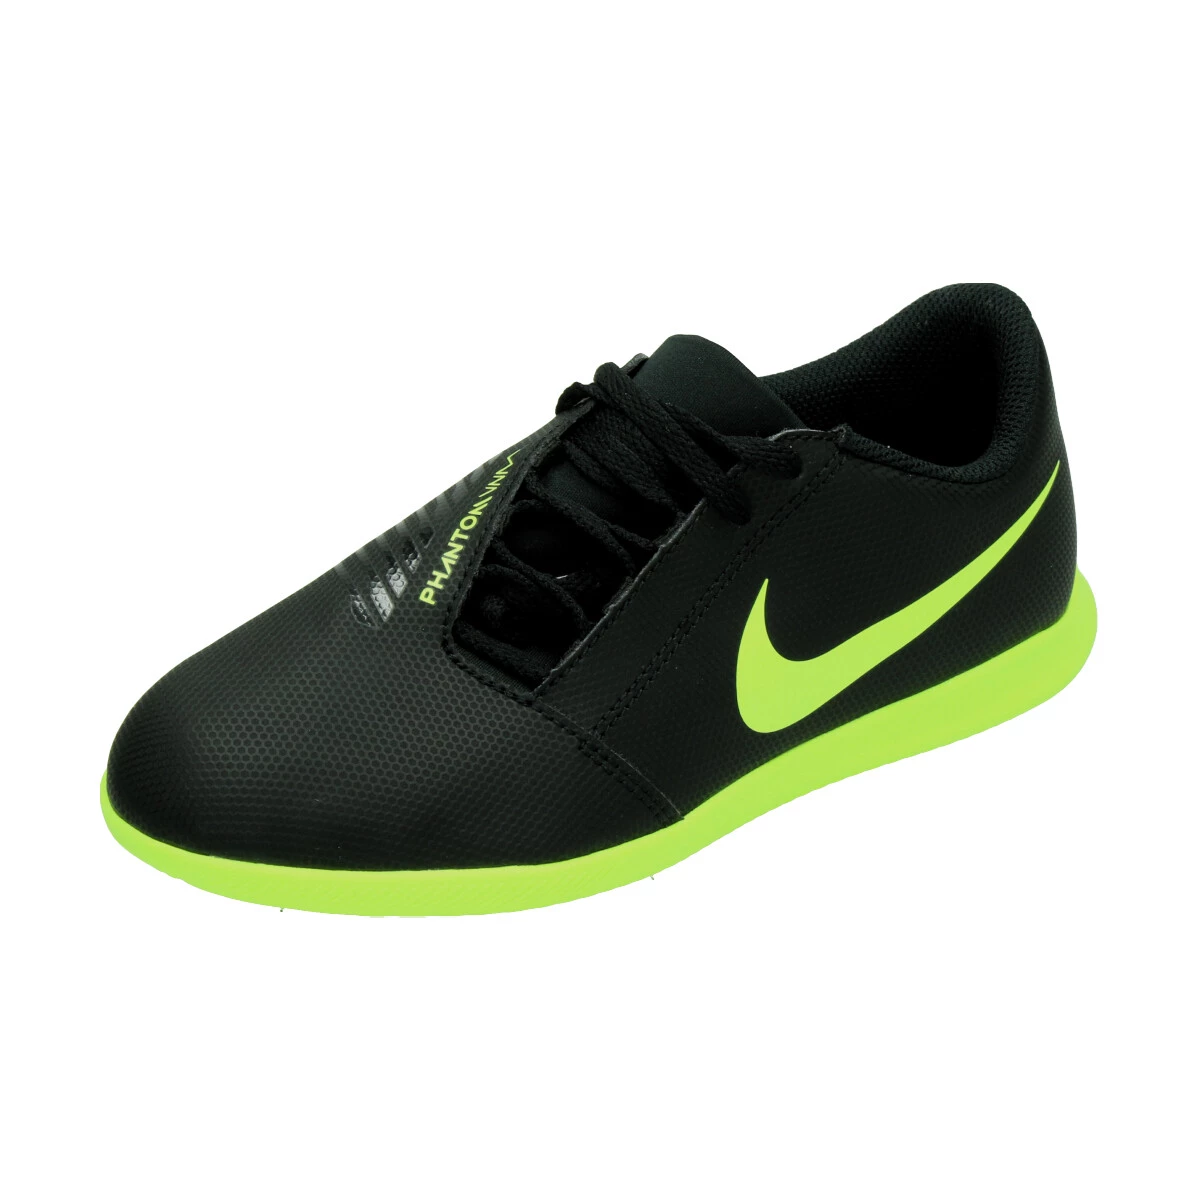 Chaussures football Nike Hypervenom Phantom III FG Noir